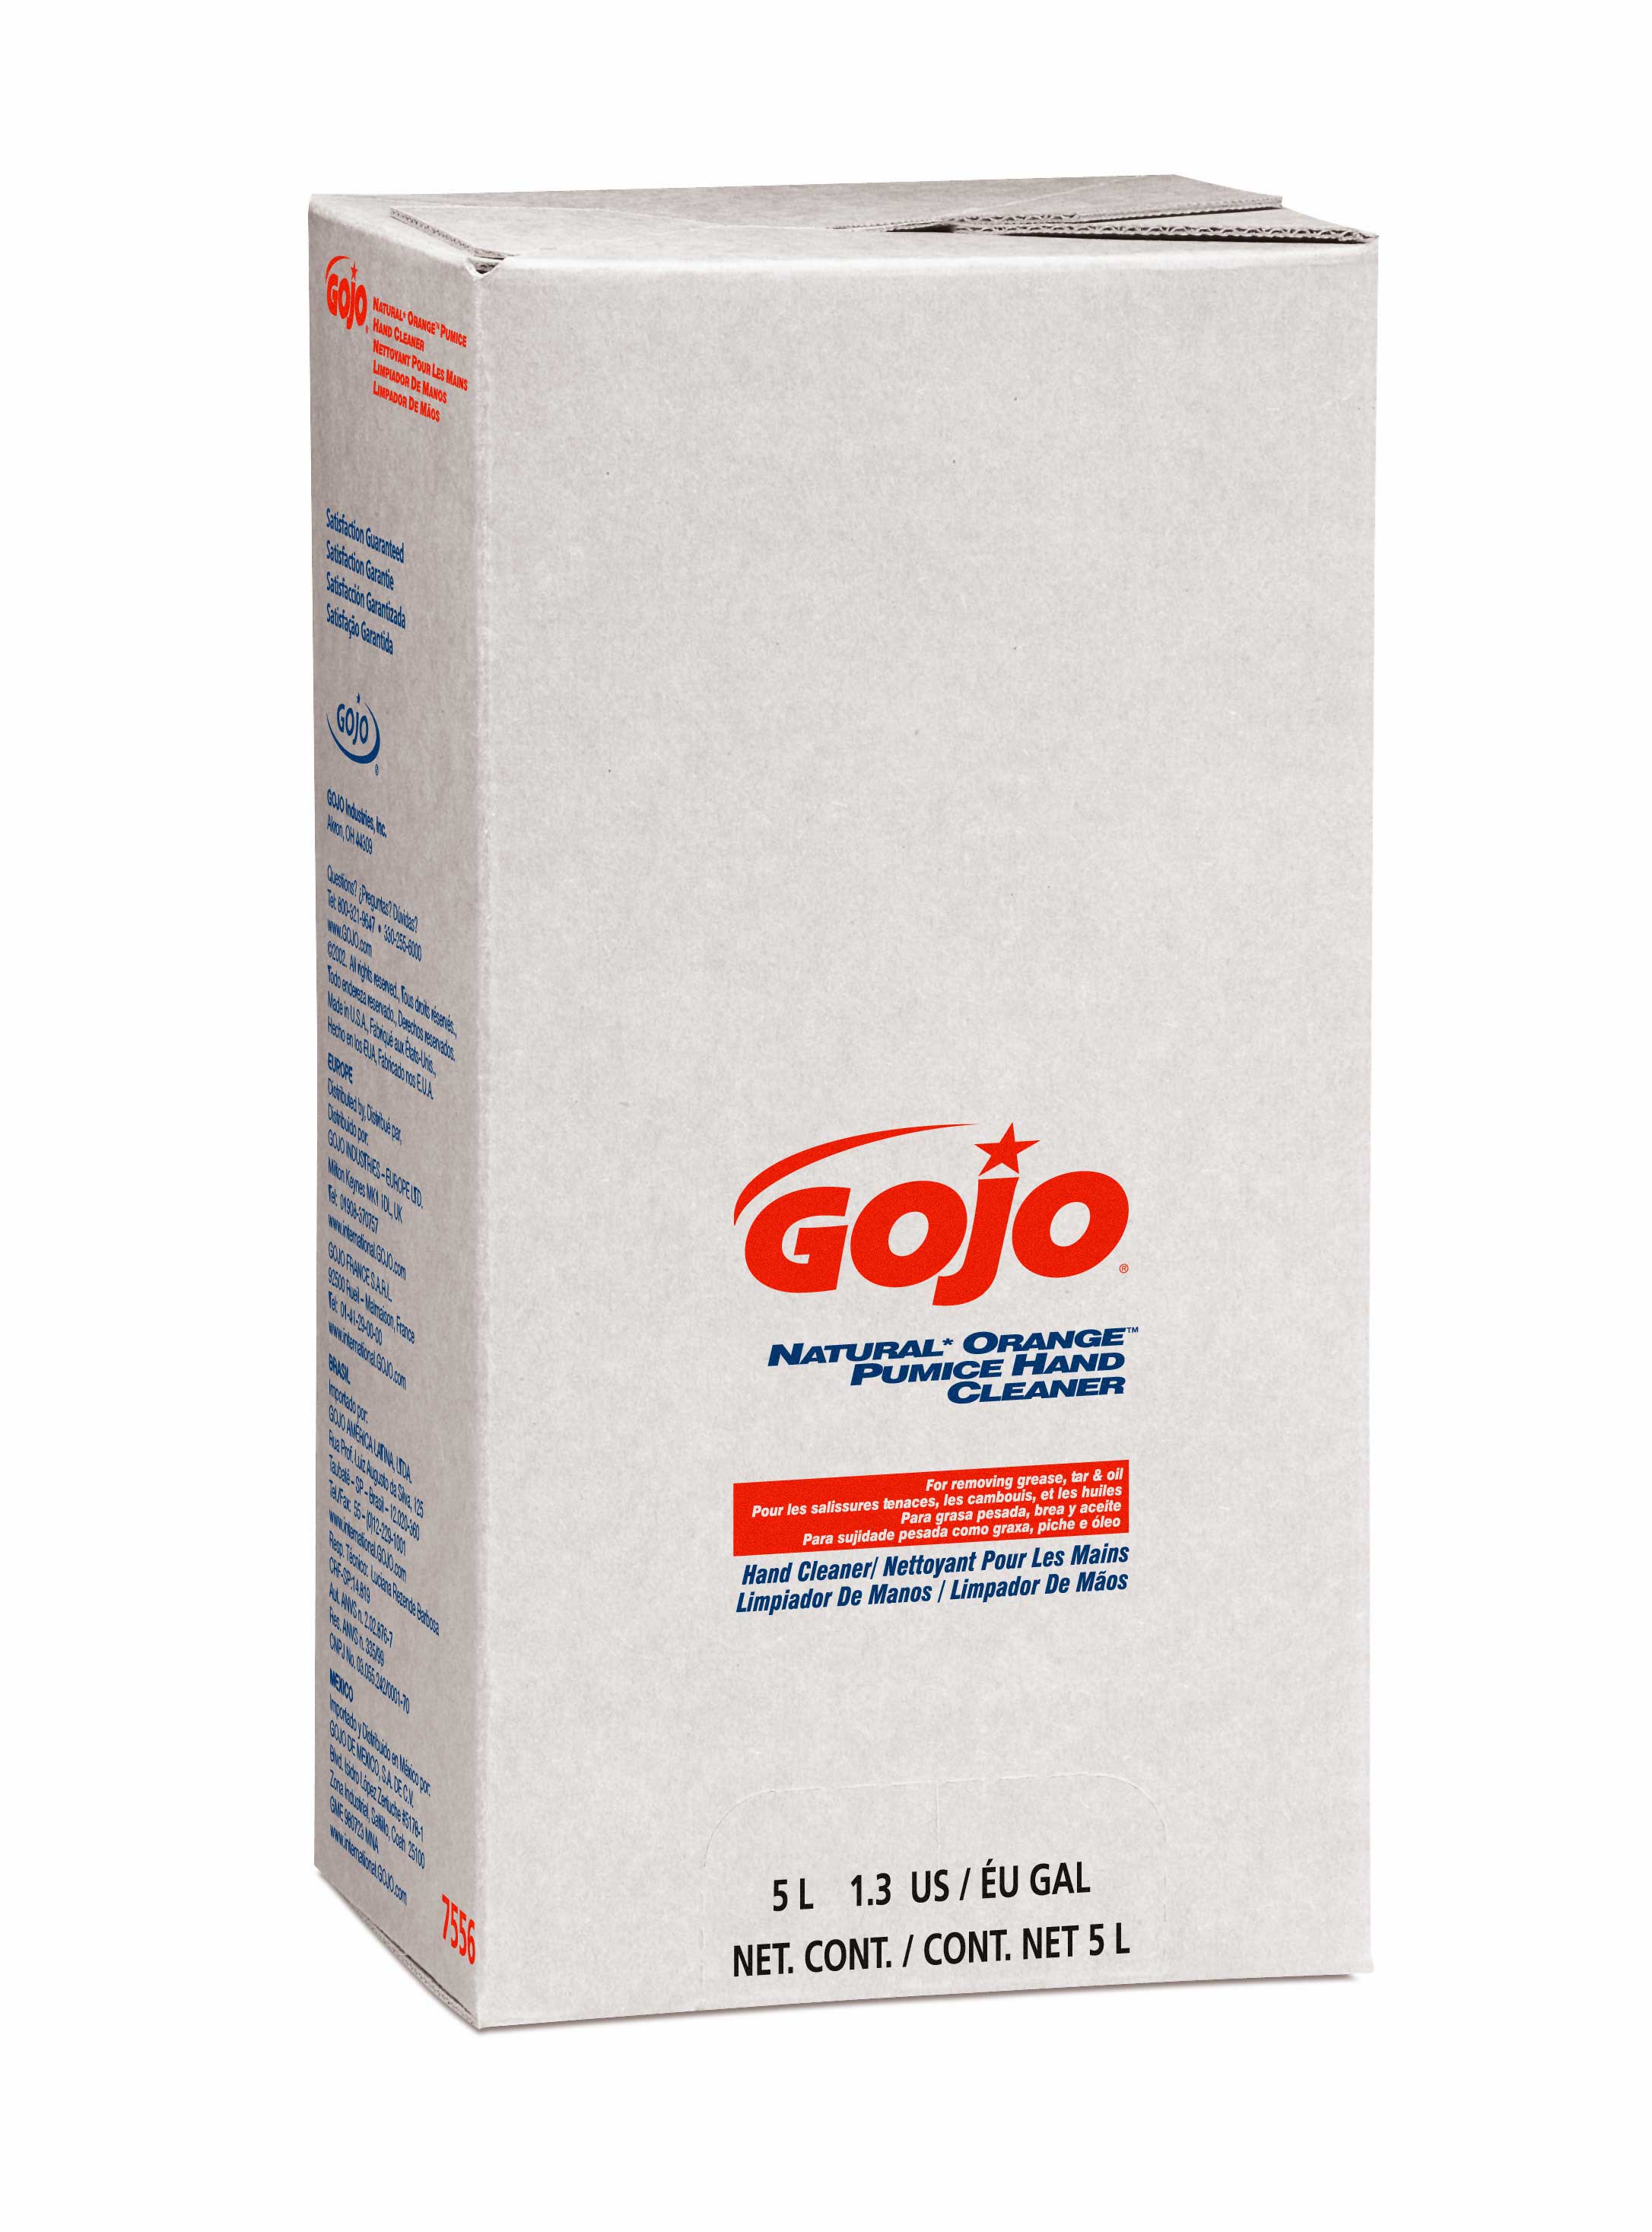 HAND SOAP TDX GOJO NATURAL
ORANGE PUMICE HAND CLEANER
5000 ML 2 PER CASE